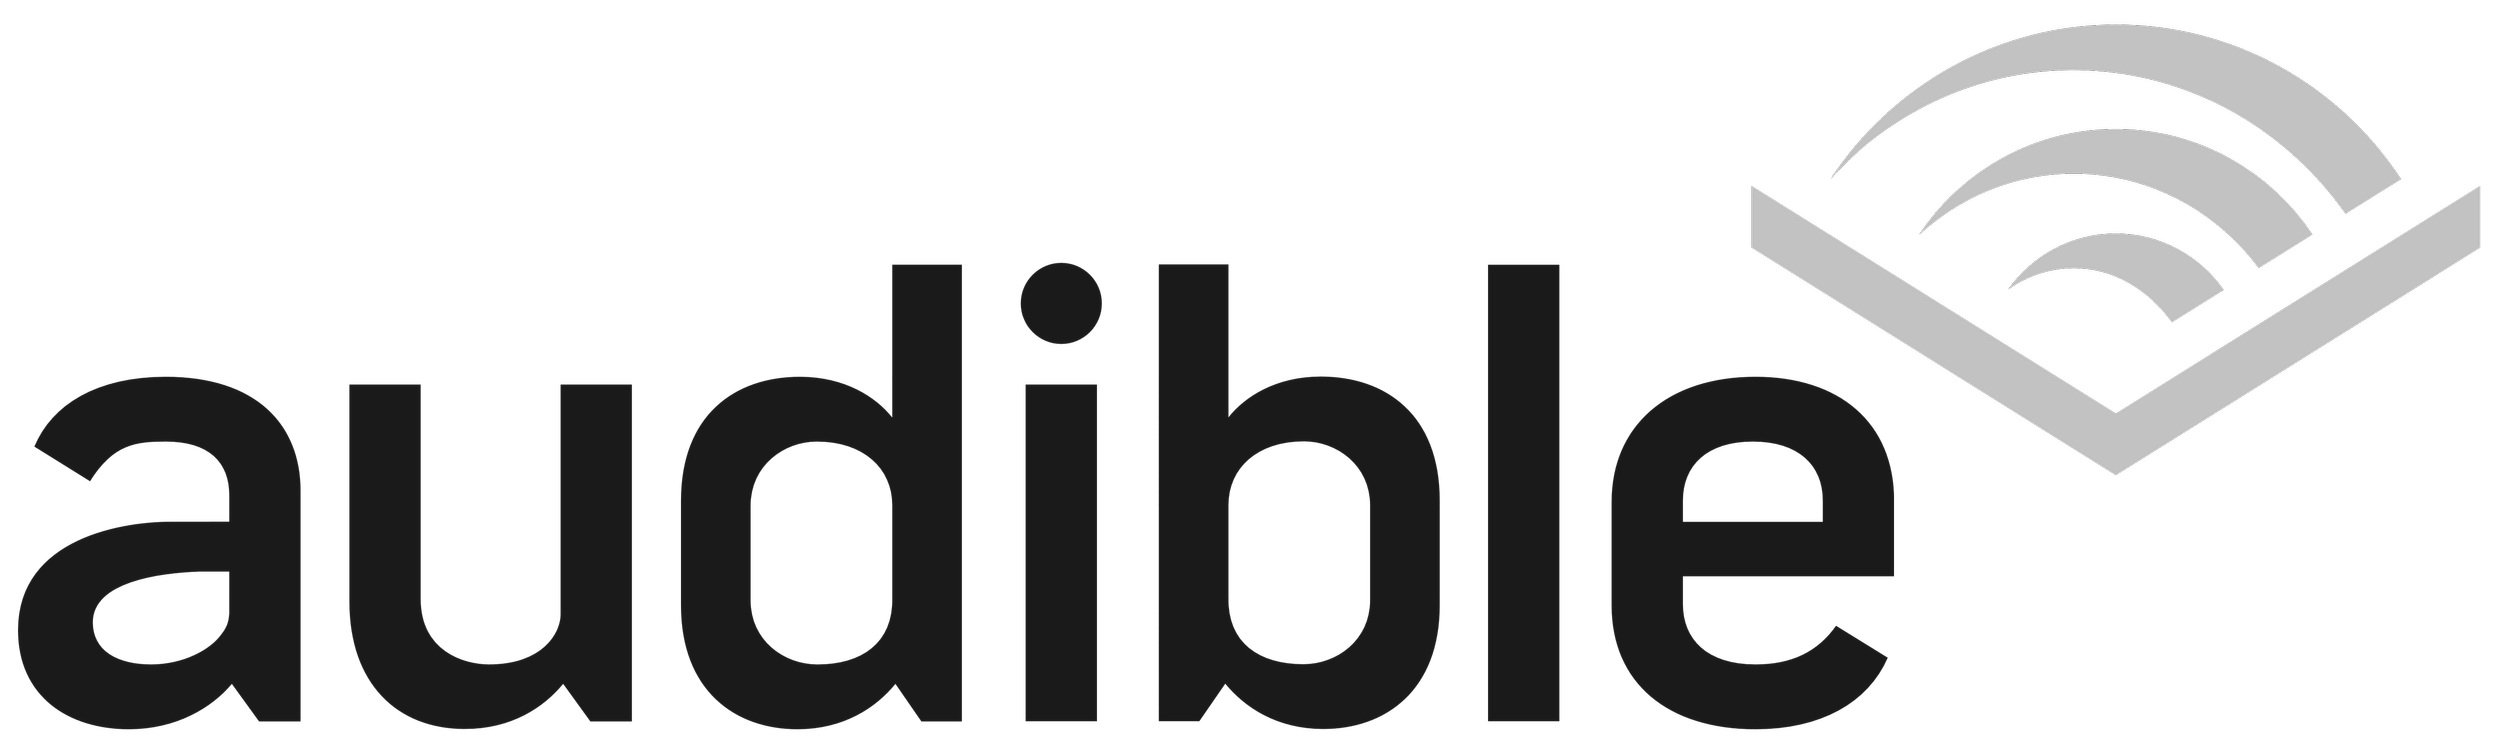 Audible_logo.jpg